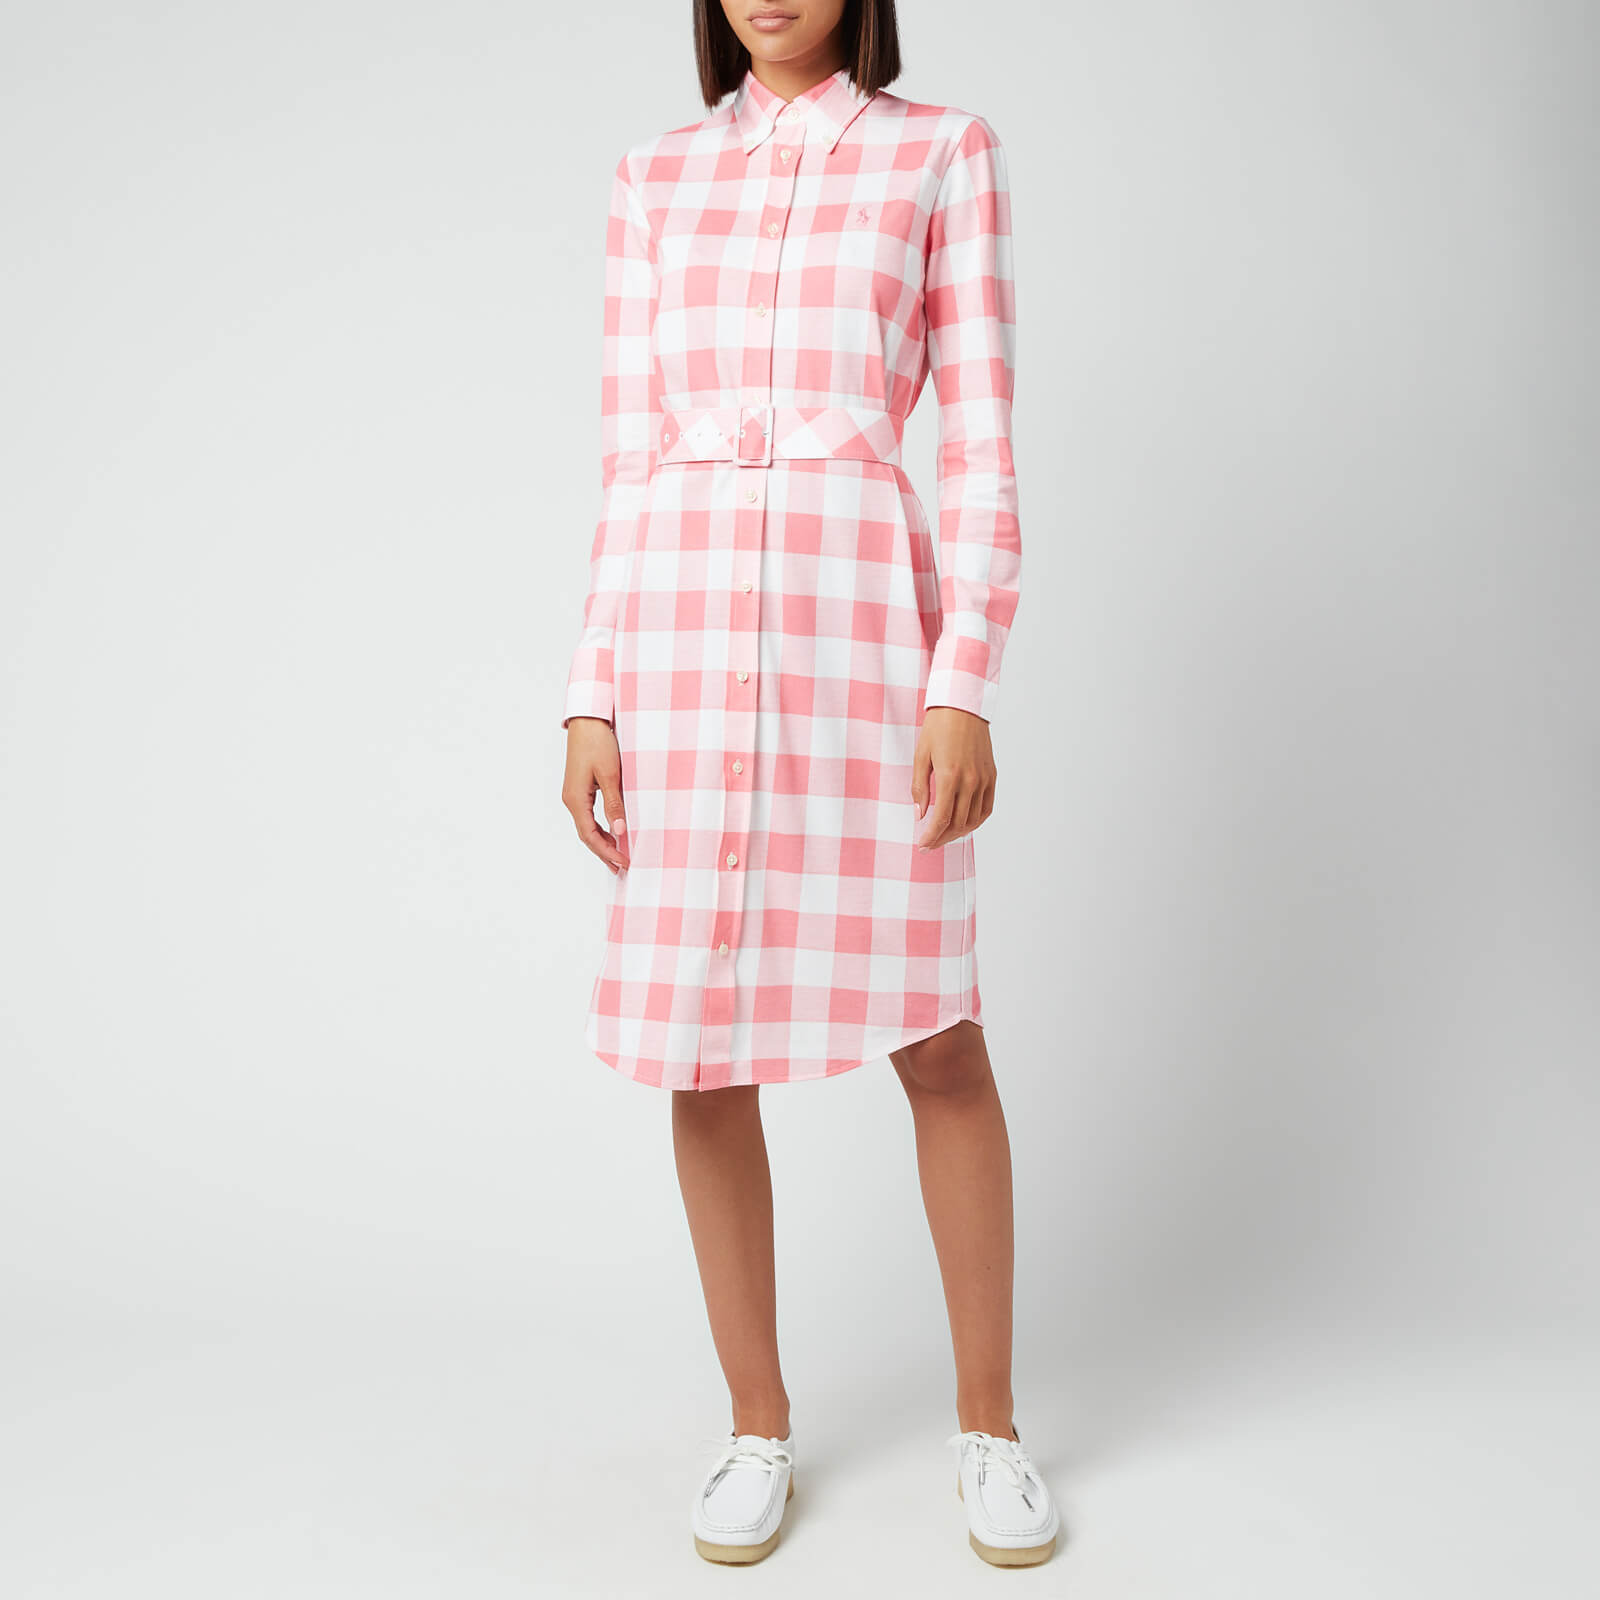 Polo Ralph Lauren Women's Heidi Shirt Dress - Ribbon Pink/White - UK 6